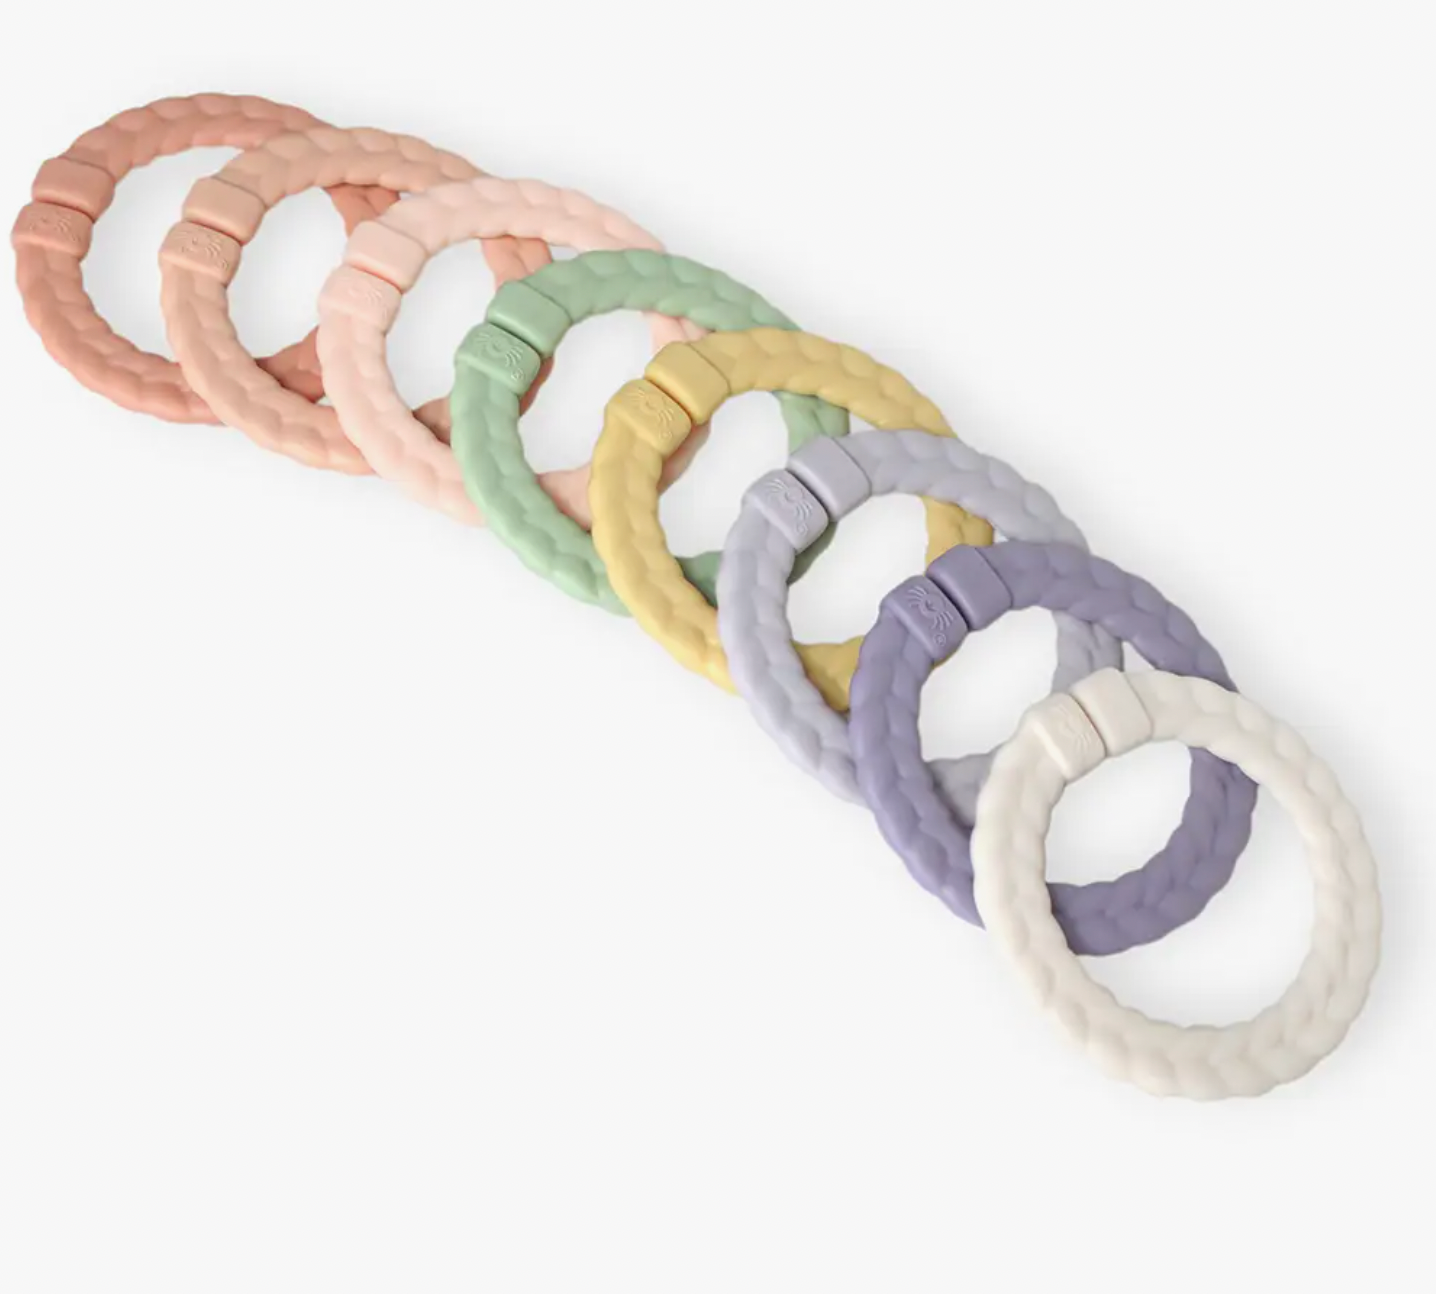 Bitzy Bespoke Itzy Rings™ Linking Ring Set Pastel